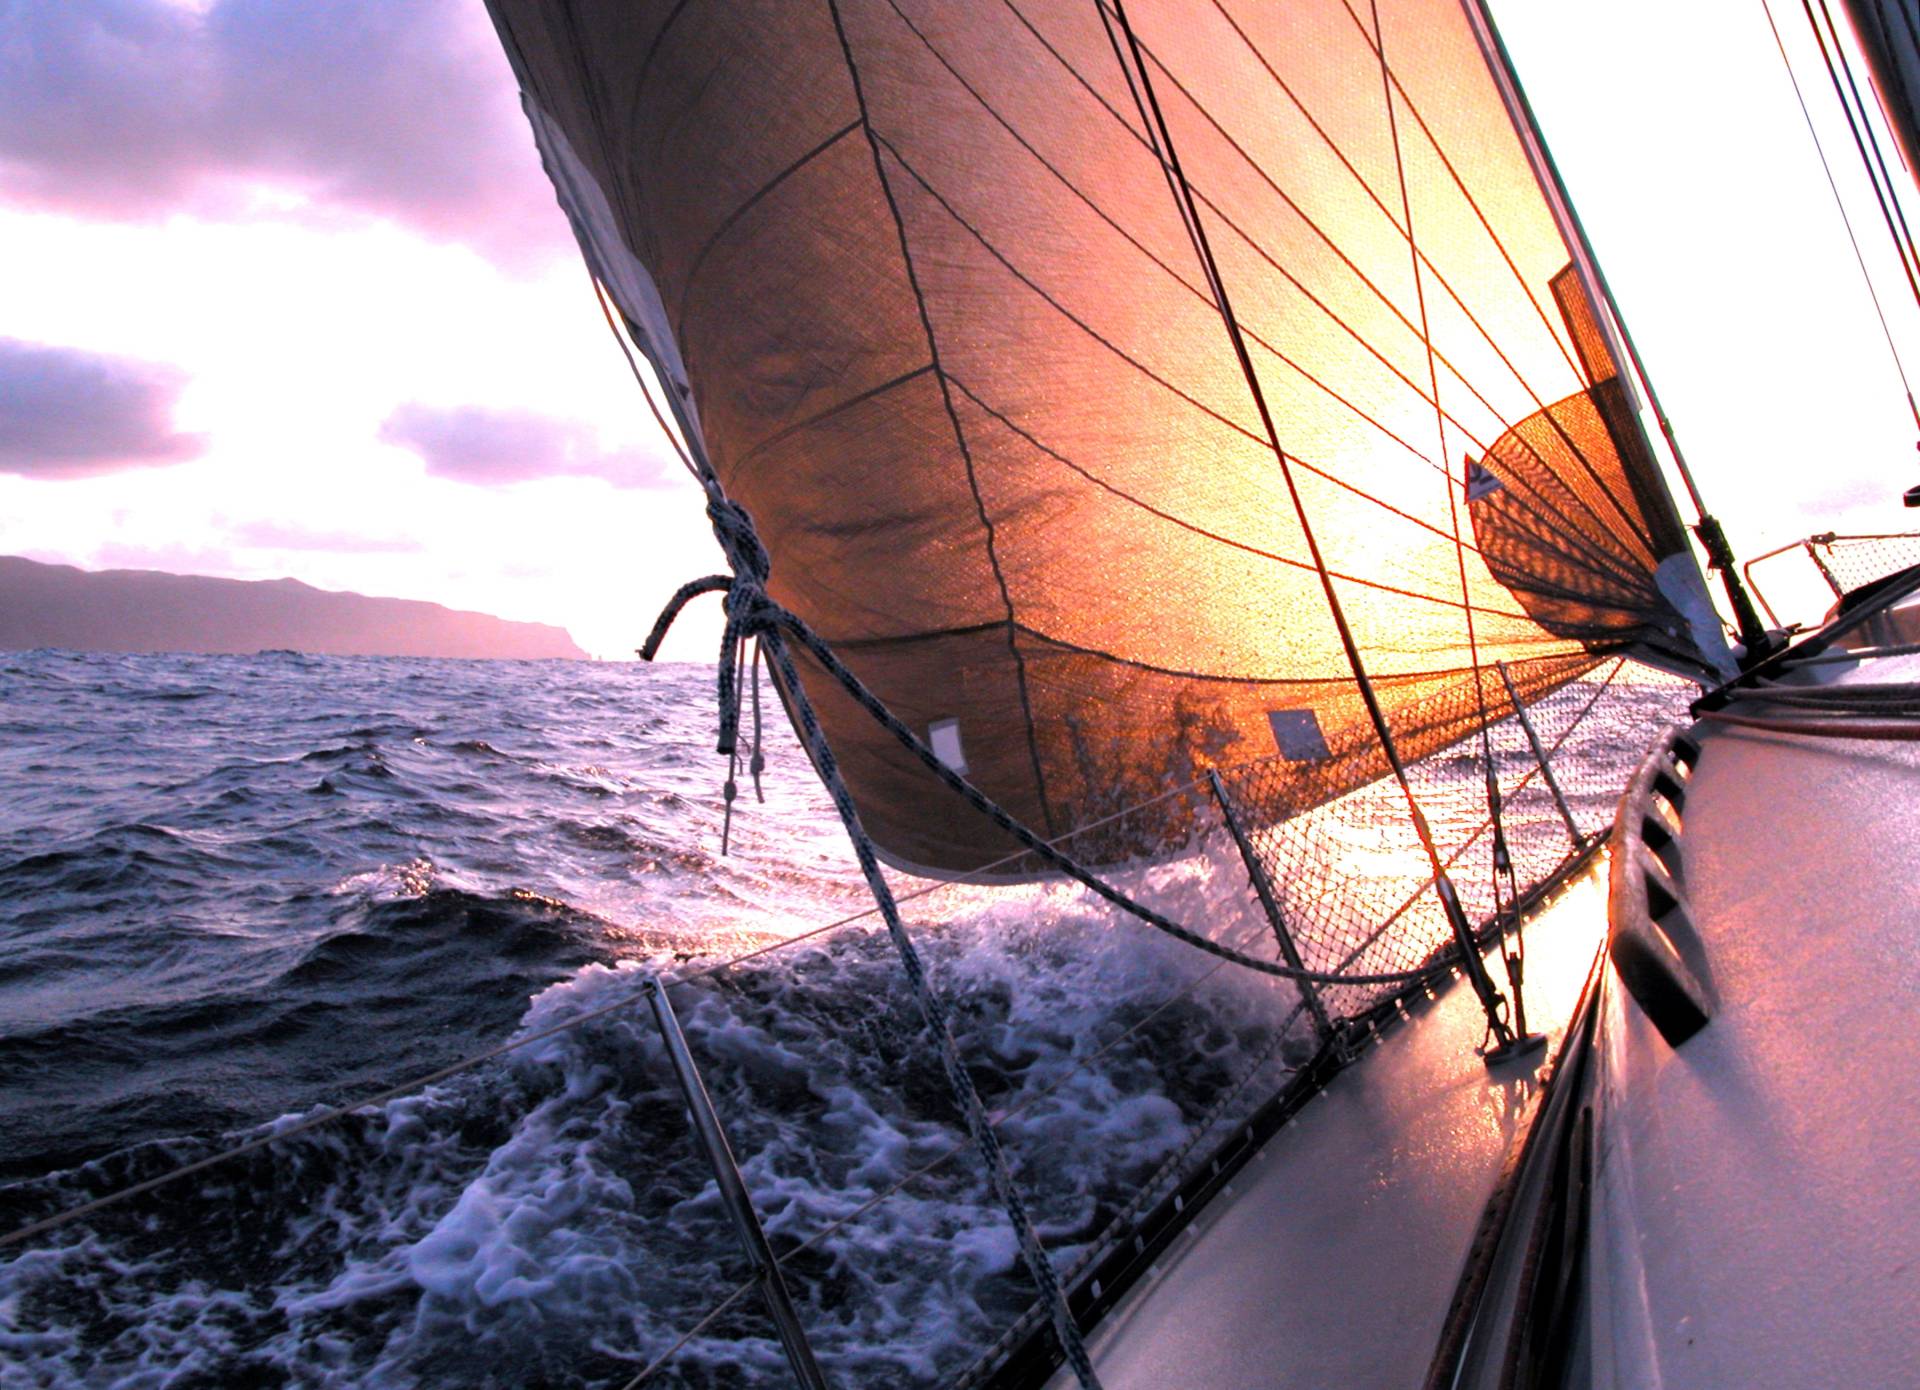 Papermoon Fototapete "Sailing to Sunset" von Papermoon